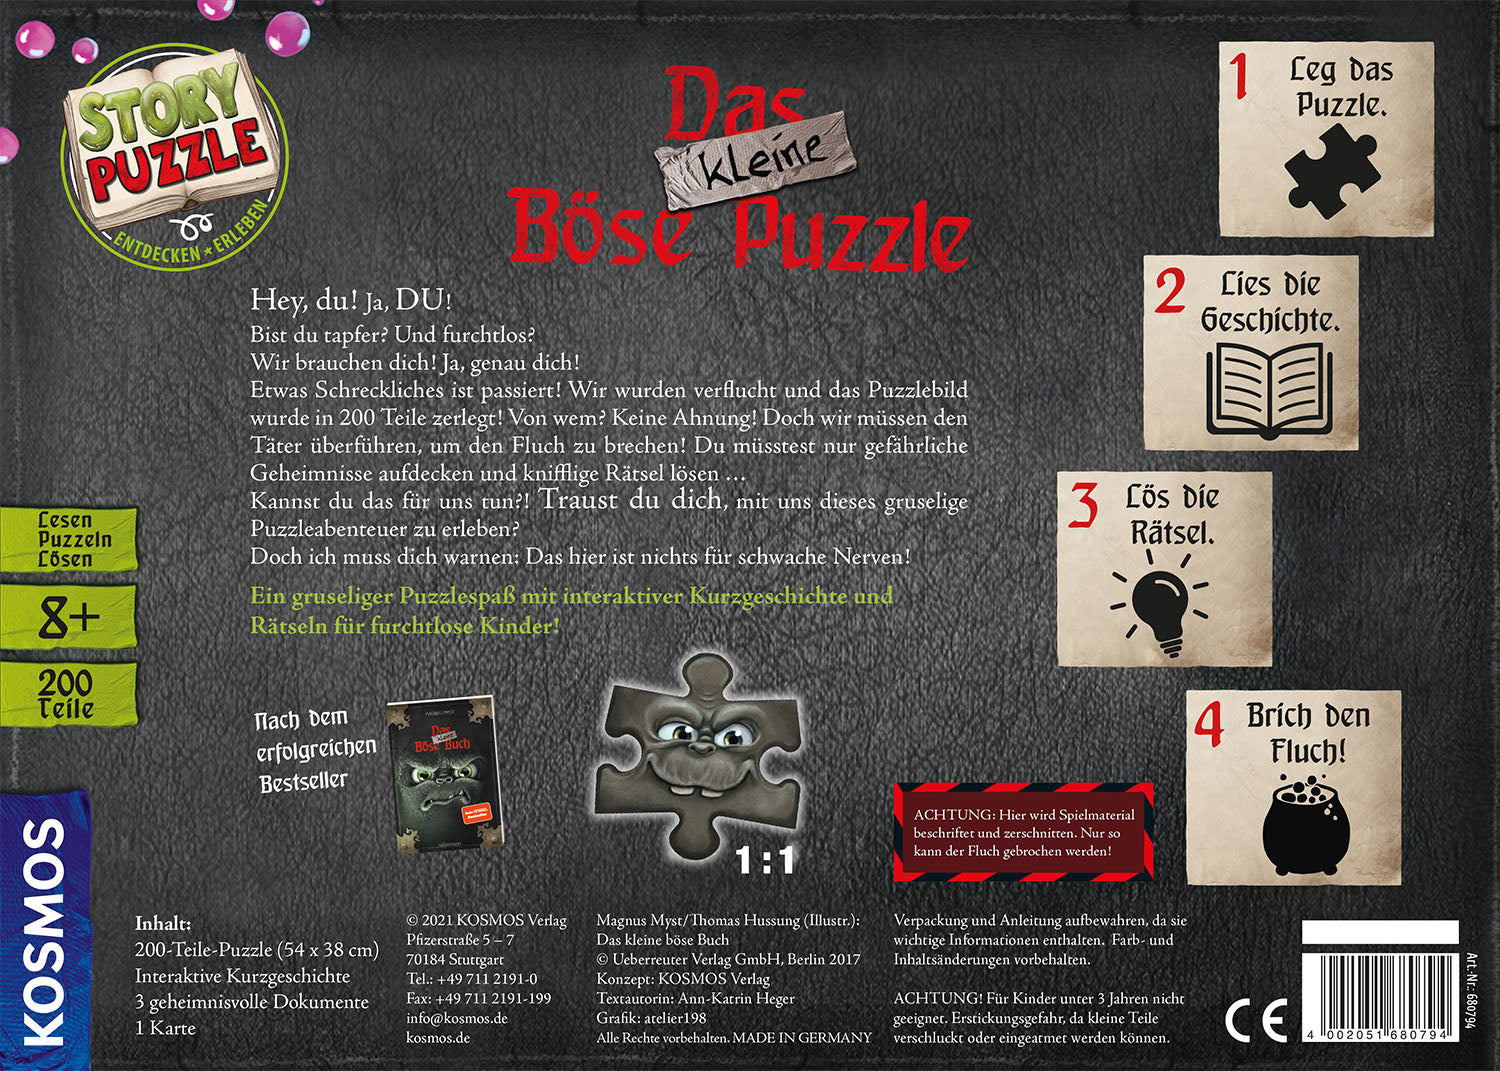 Das kleine böse Puzzle | Storypuzzle 200 Teile | Kosmos